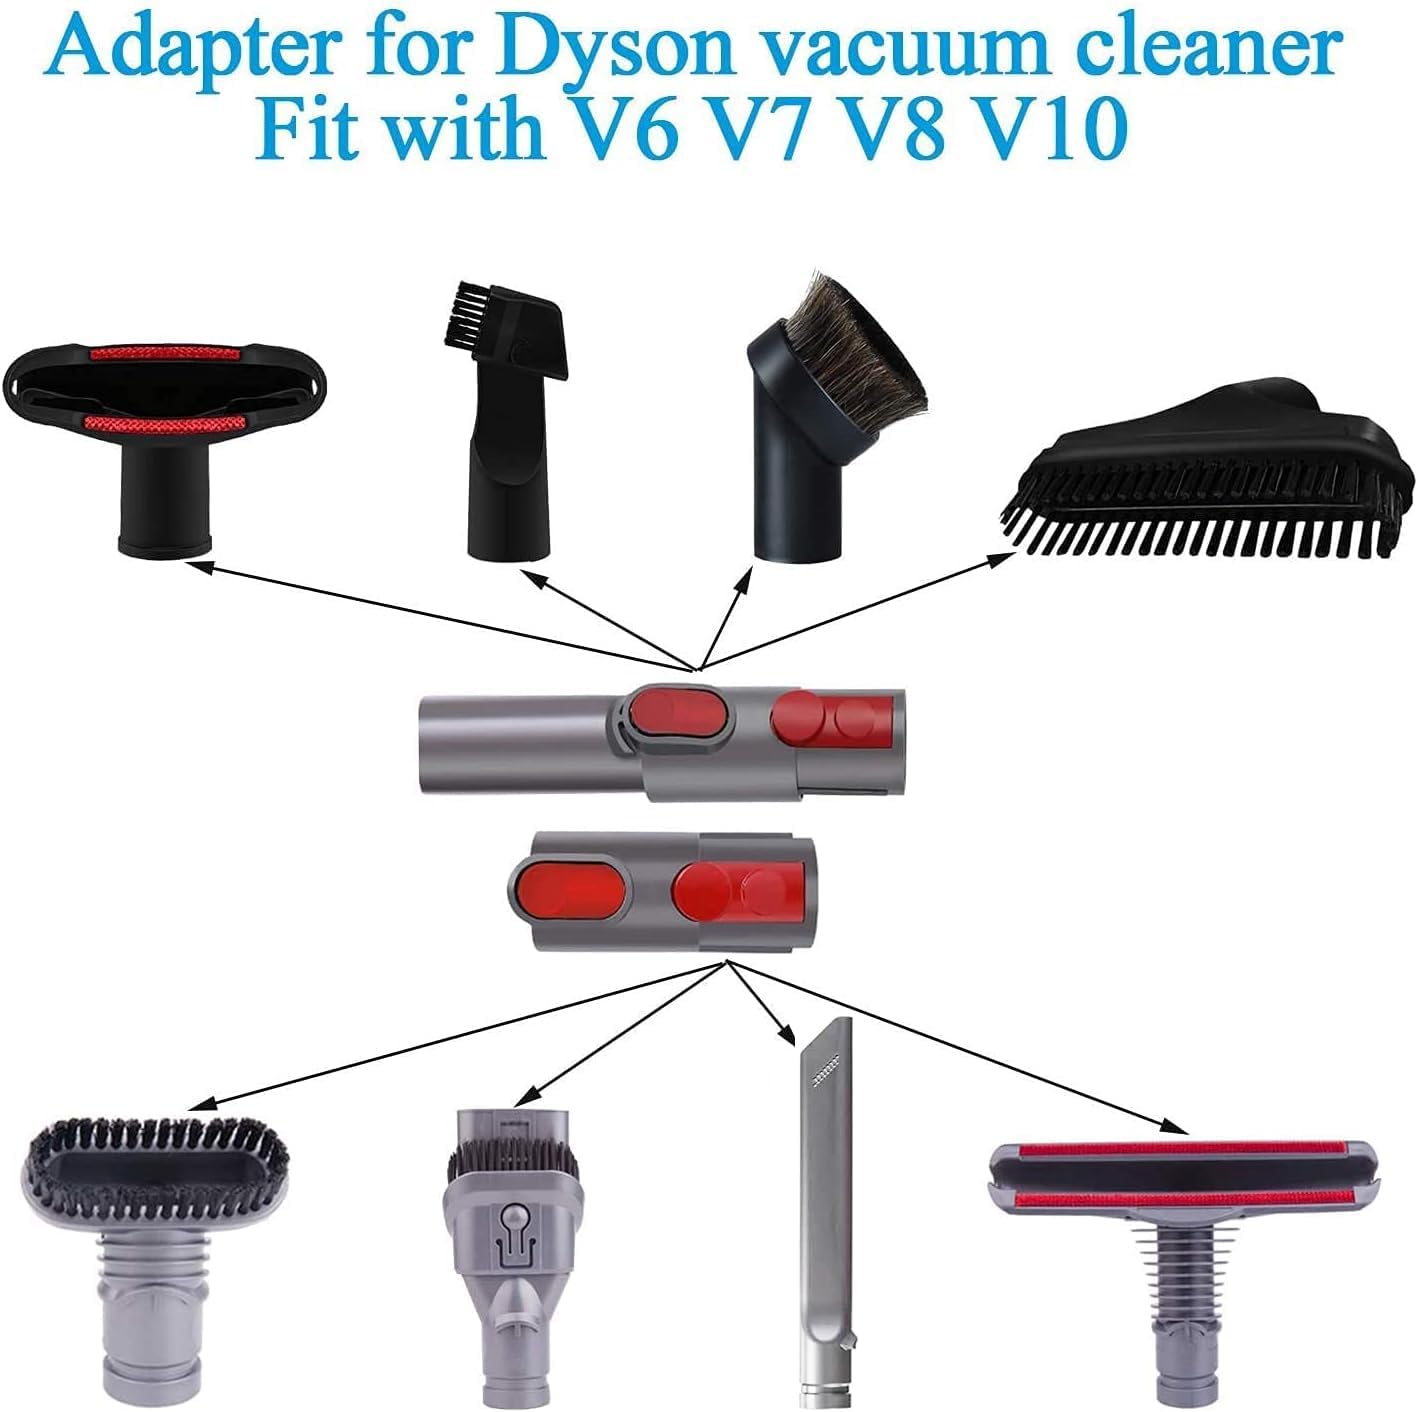 Vacuum accessories, Dyson